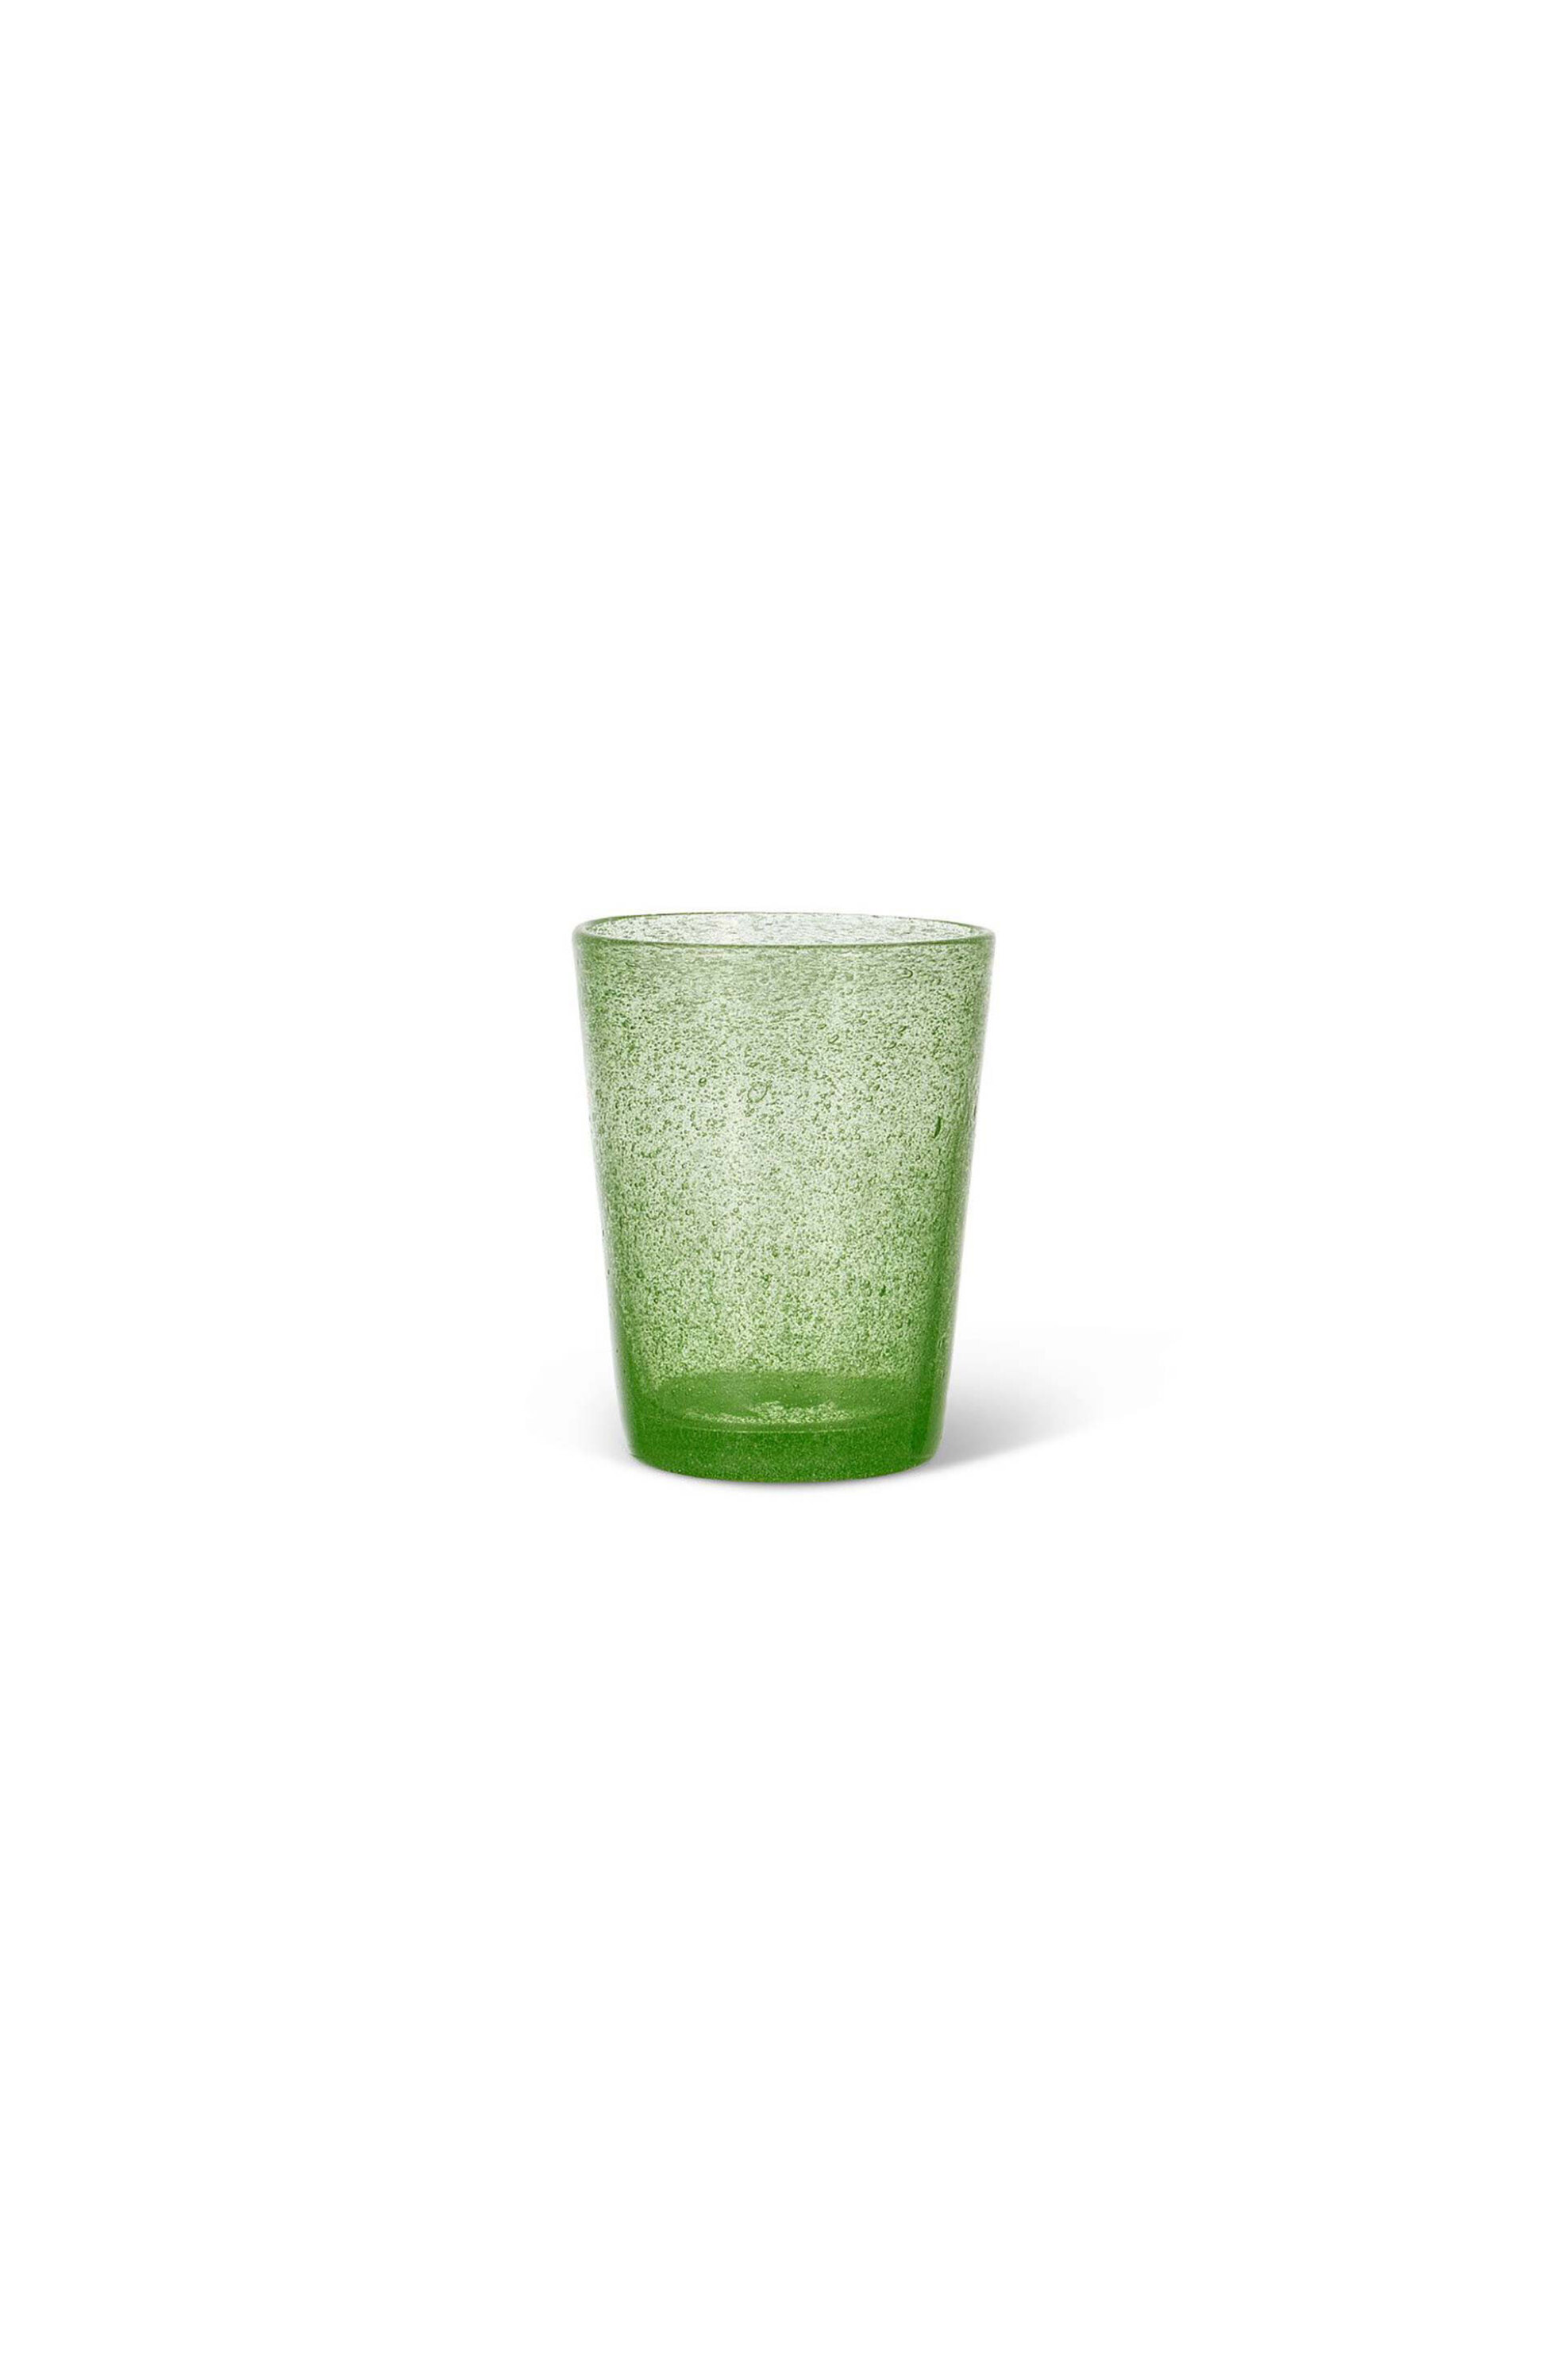 Home > ΚΟΥΖΙΝΑ > Υαλικά > Ποτήρια Coincasa ποτήρι γυάλινο με ανάγλυφο σχέδιο 10 x 8 cm - 007212459 Πράσινο